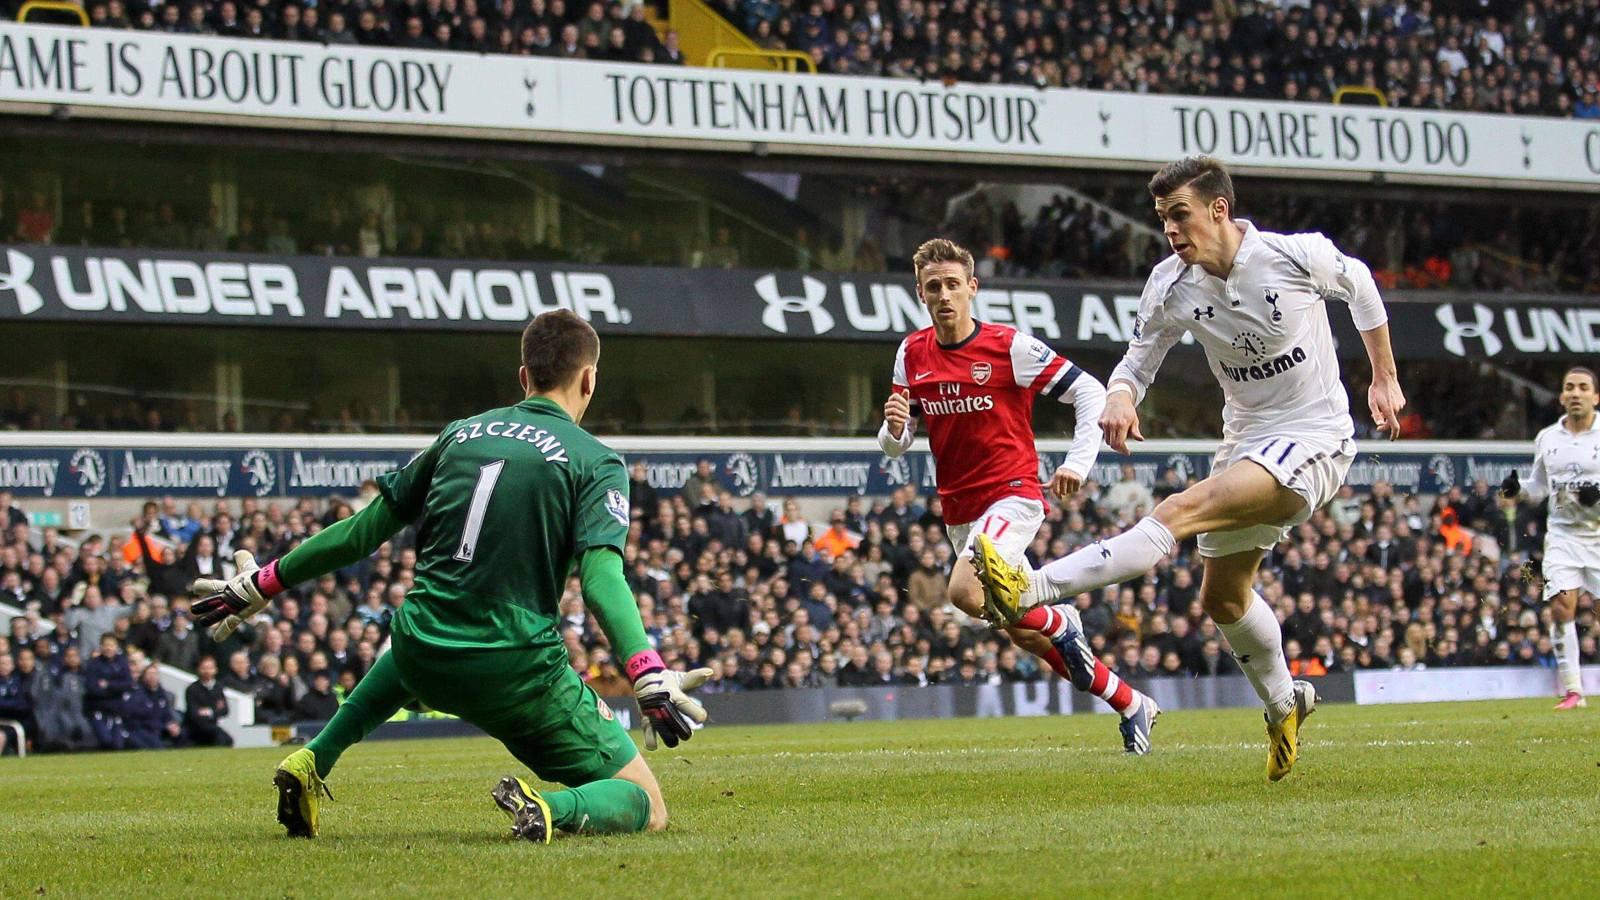 Gareth Bale scoring a goal against Arsenal